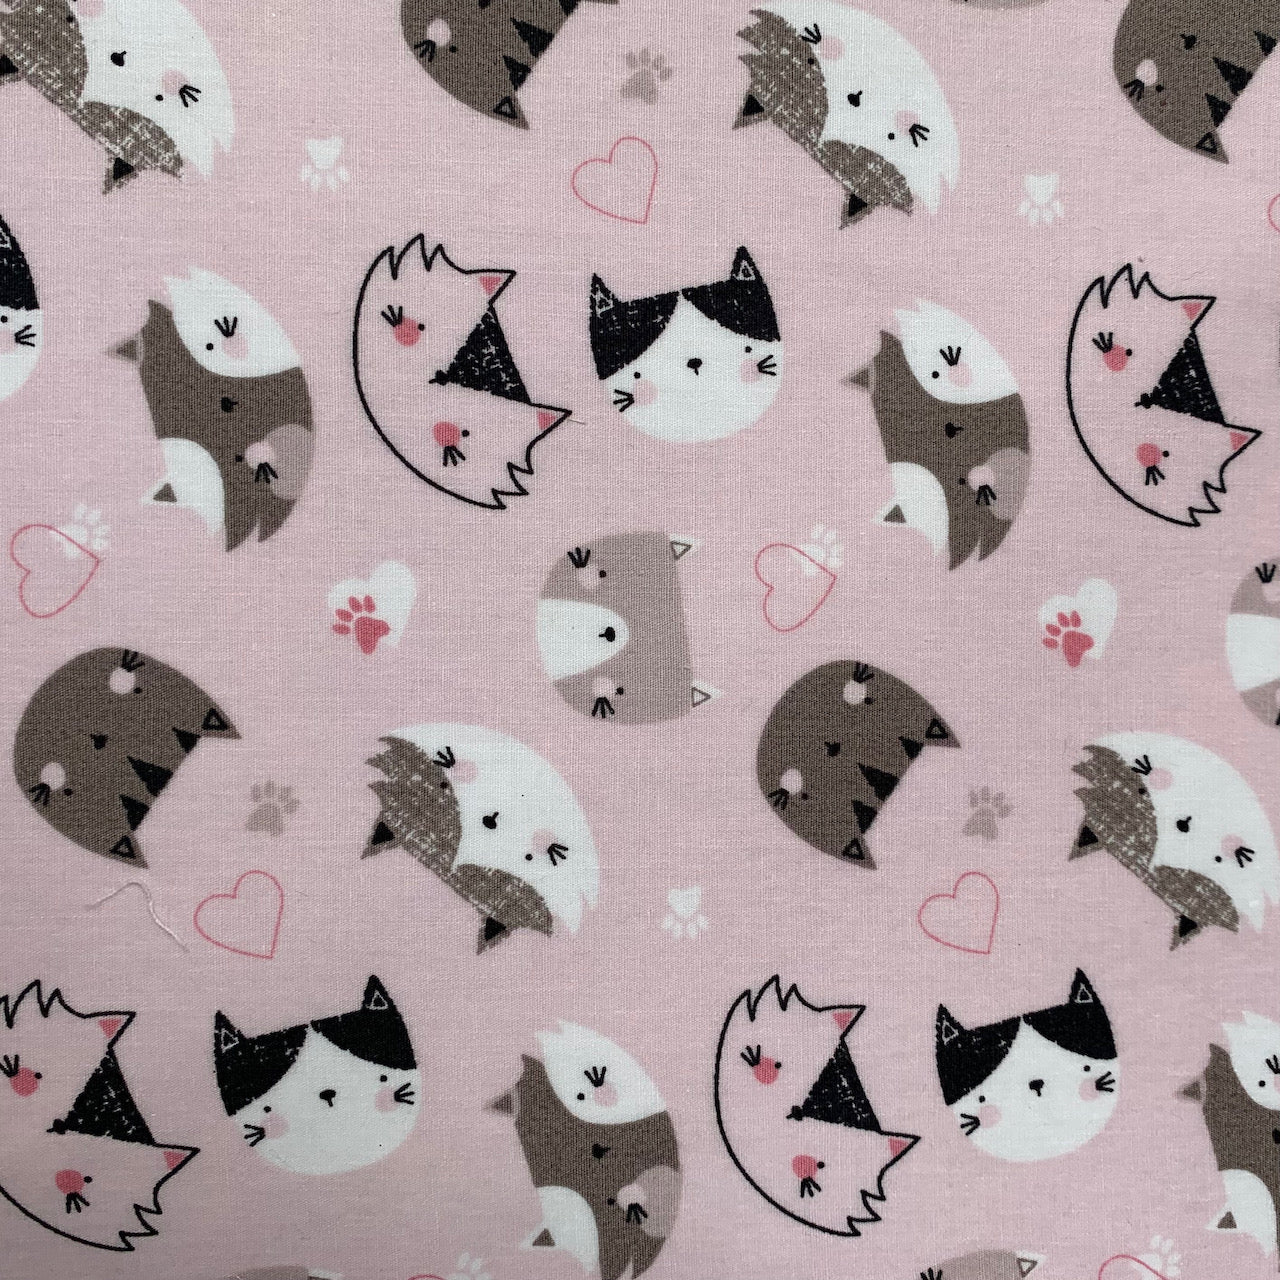 Fabric Felt Sheet - Cute Critters on Pink